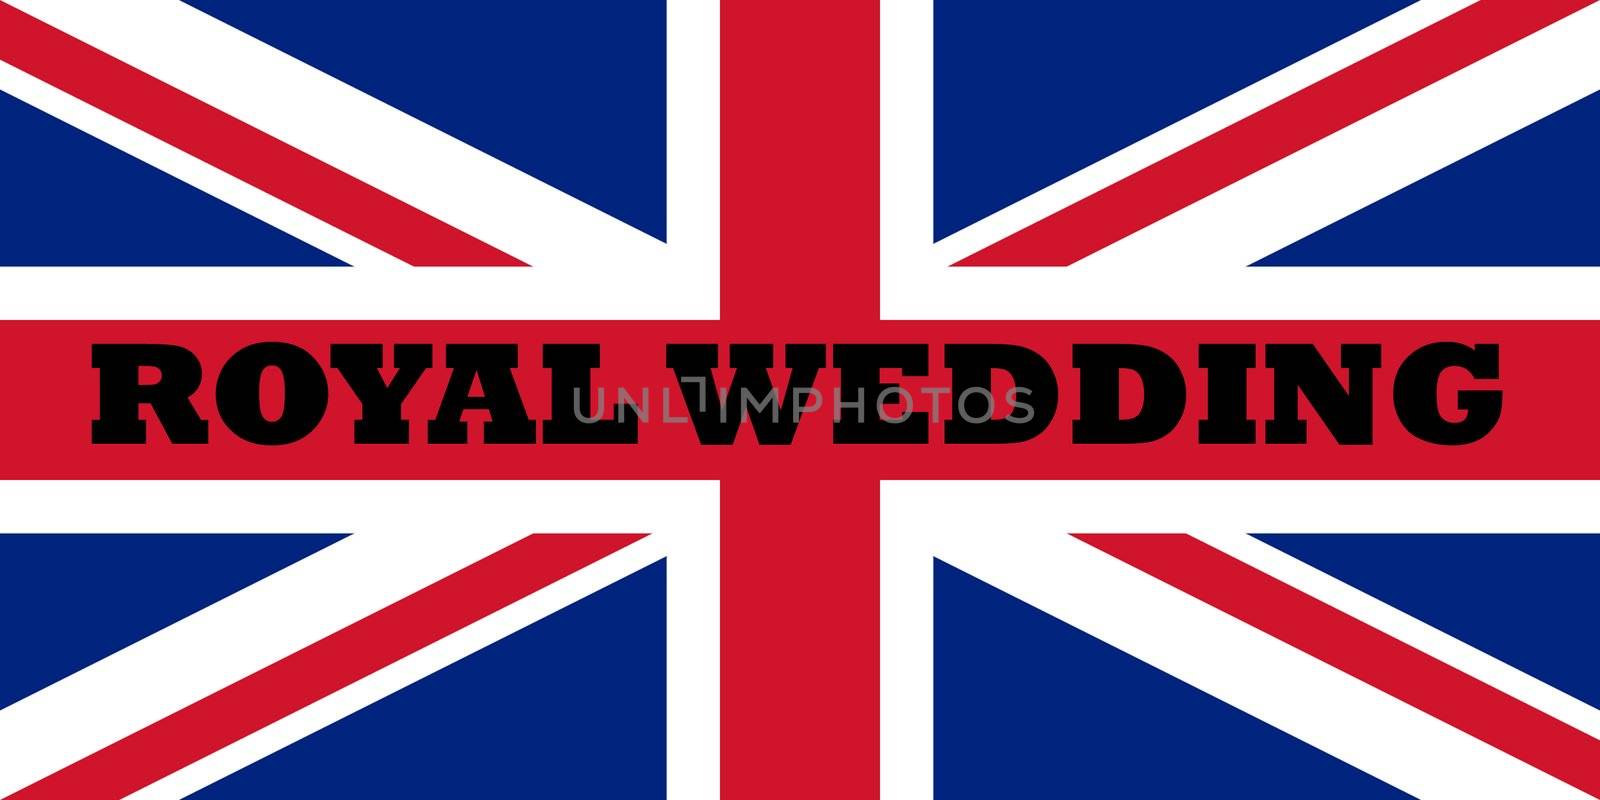 Royal wedding flag by speedfighter